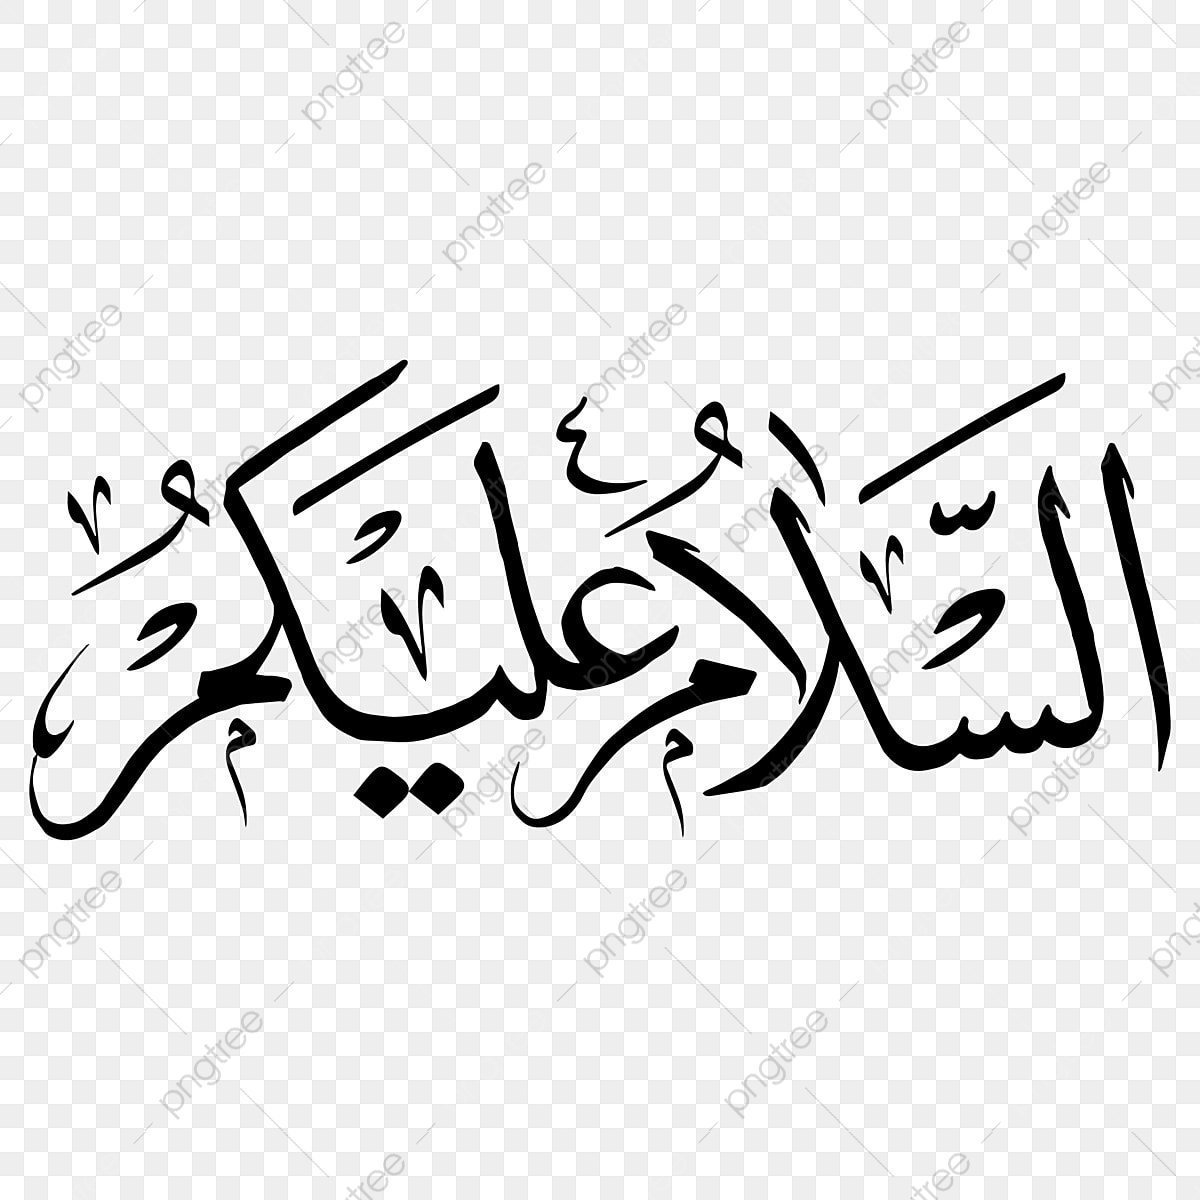 pngtree-assalam-o-alaikum-arabic-calligraphy-png-and-vector-png-image_7965780.jpeg